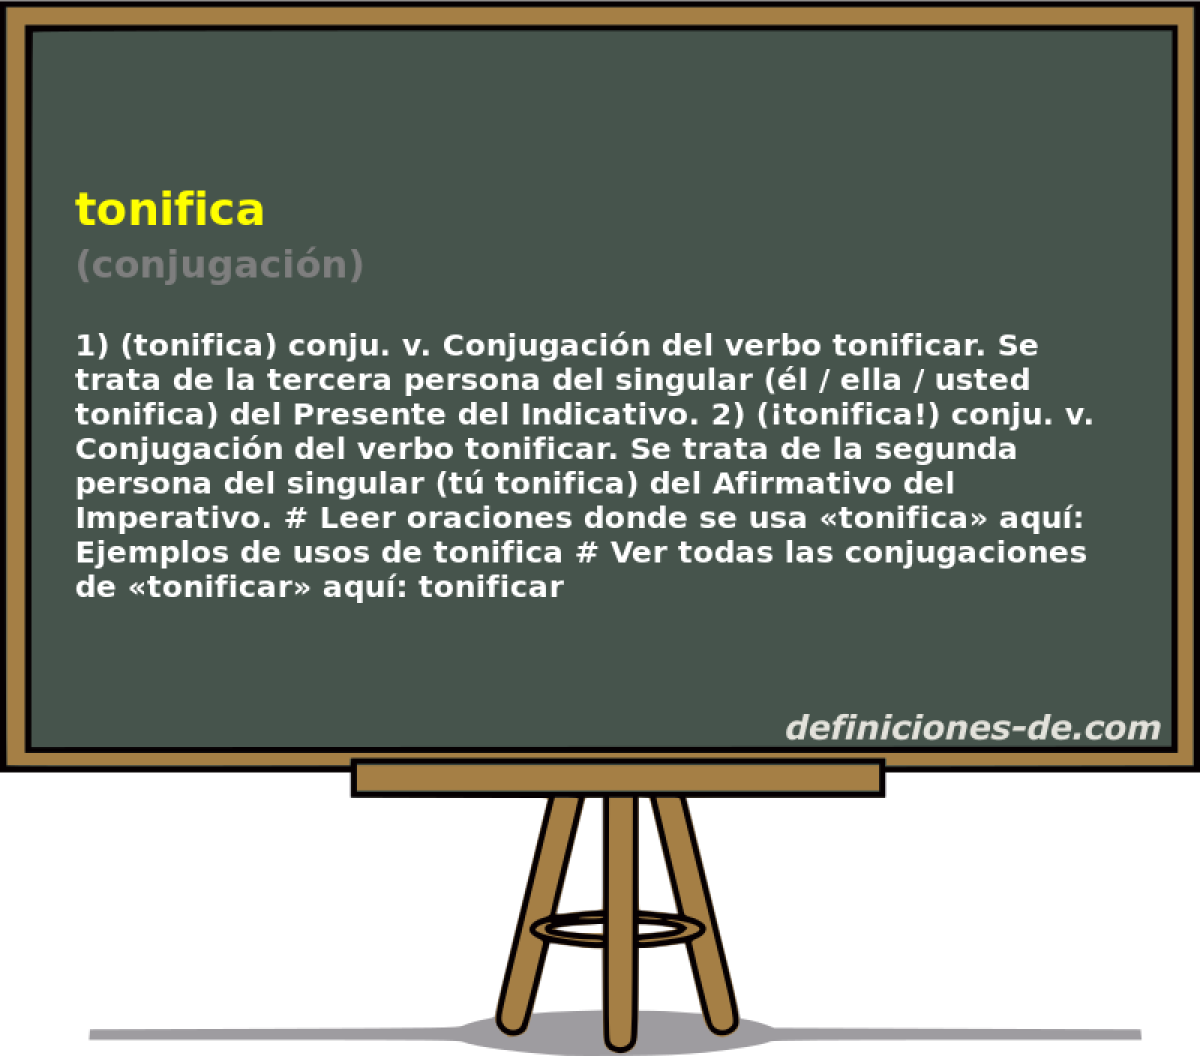 tonifica (conjugacin)